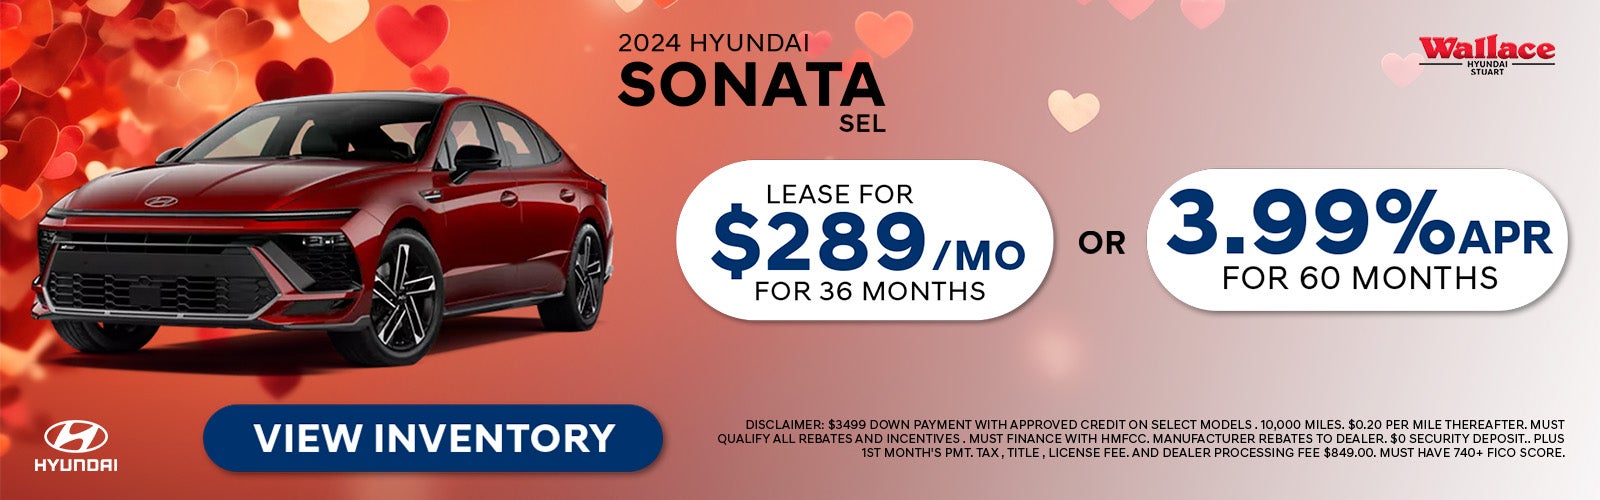 Hyundai Sonata Special Offer